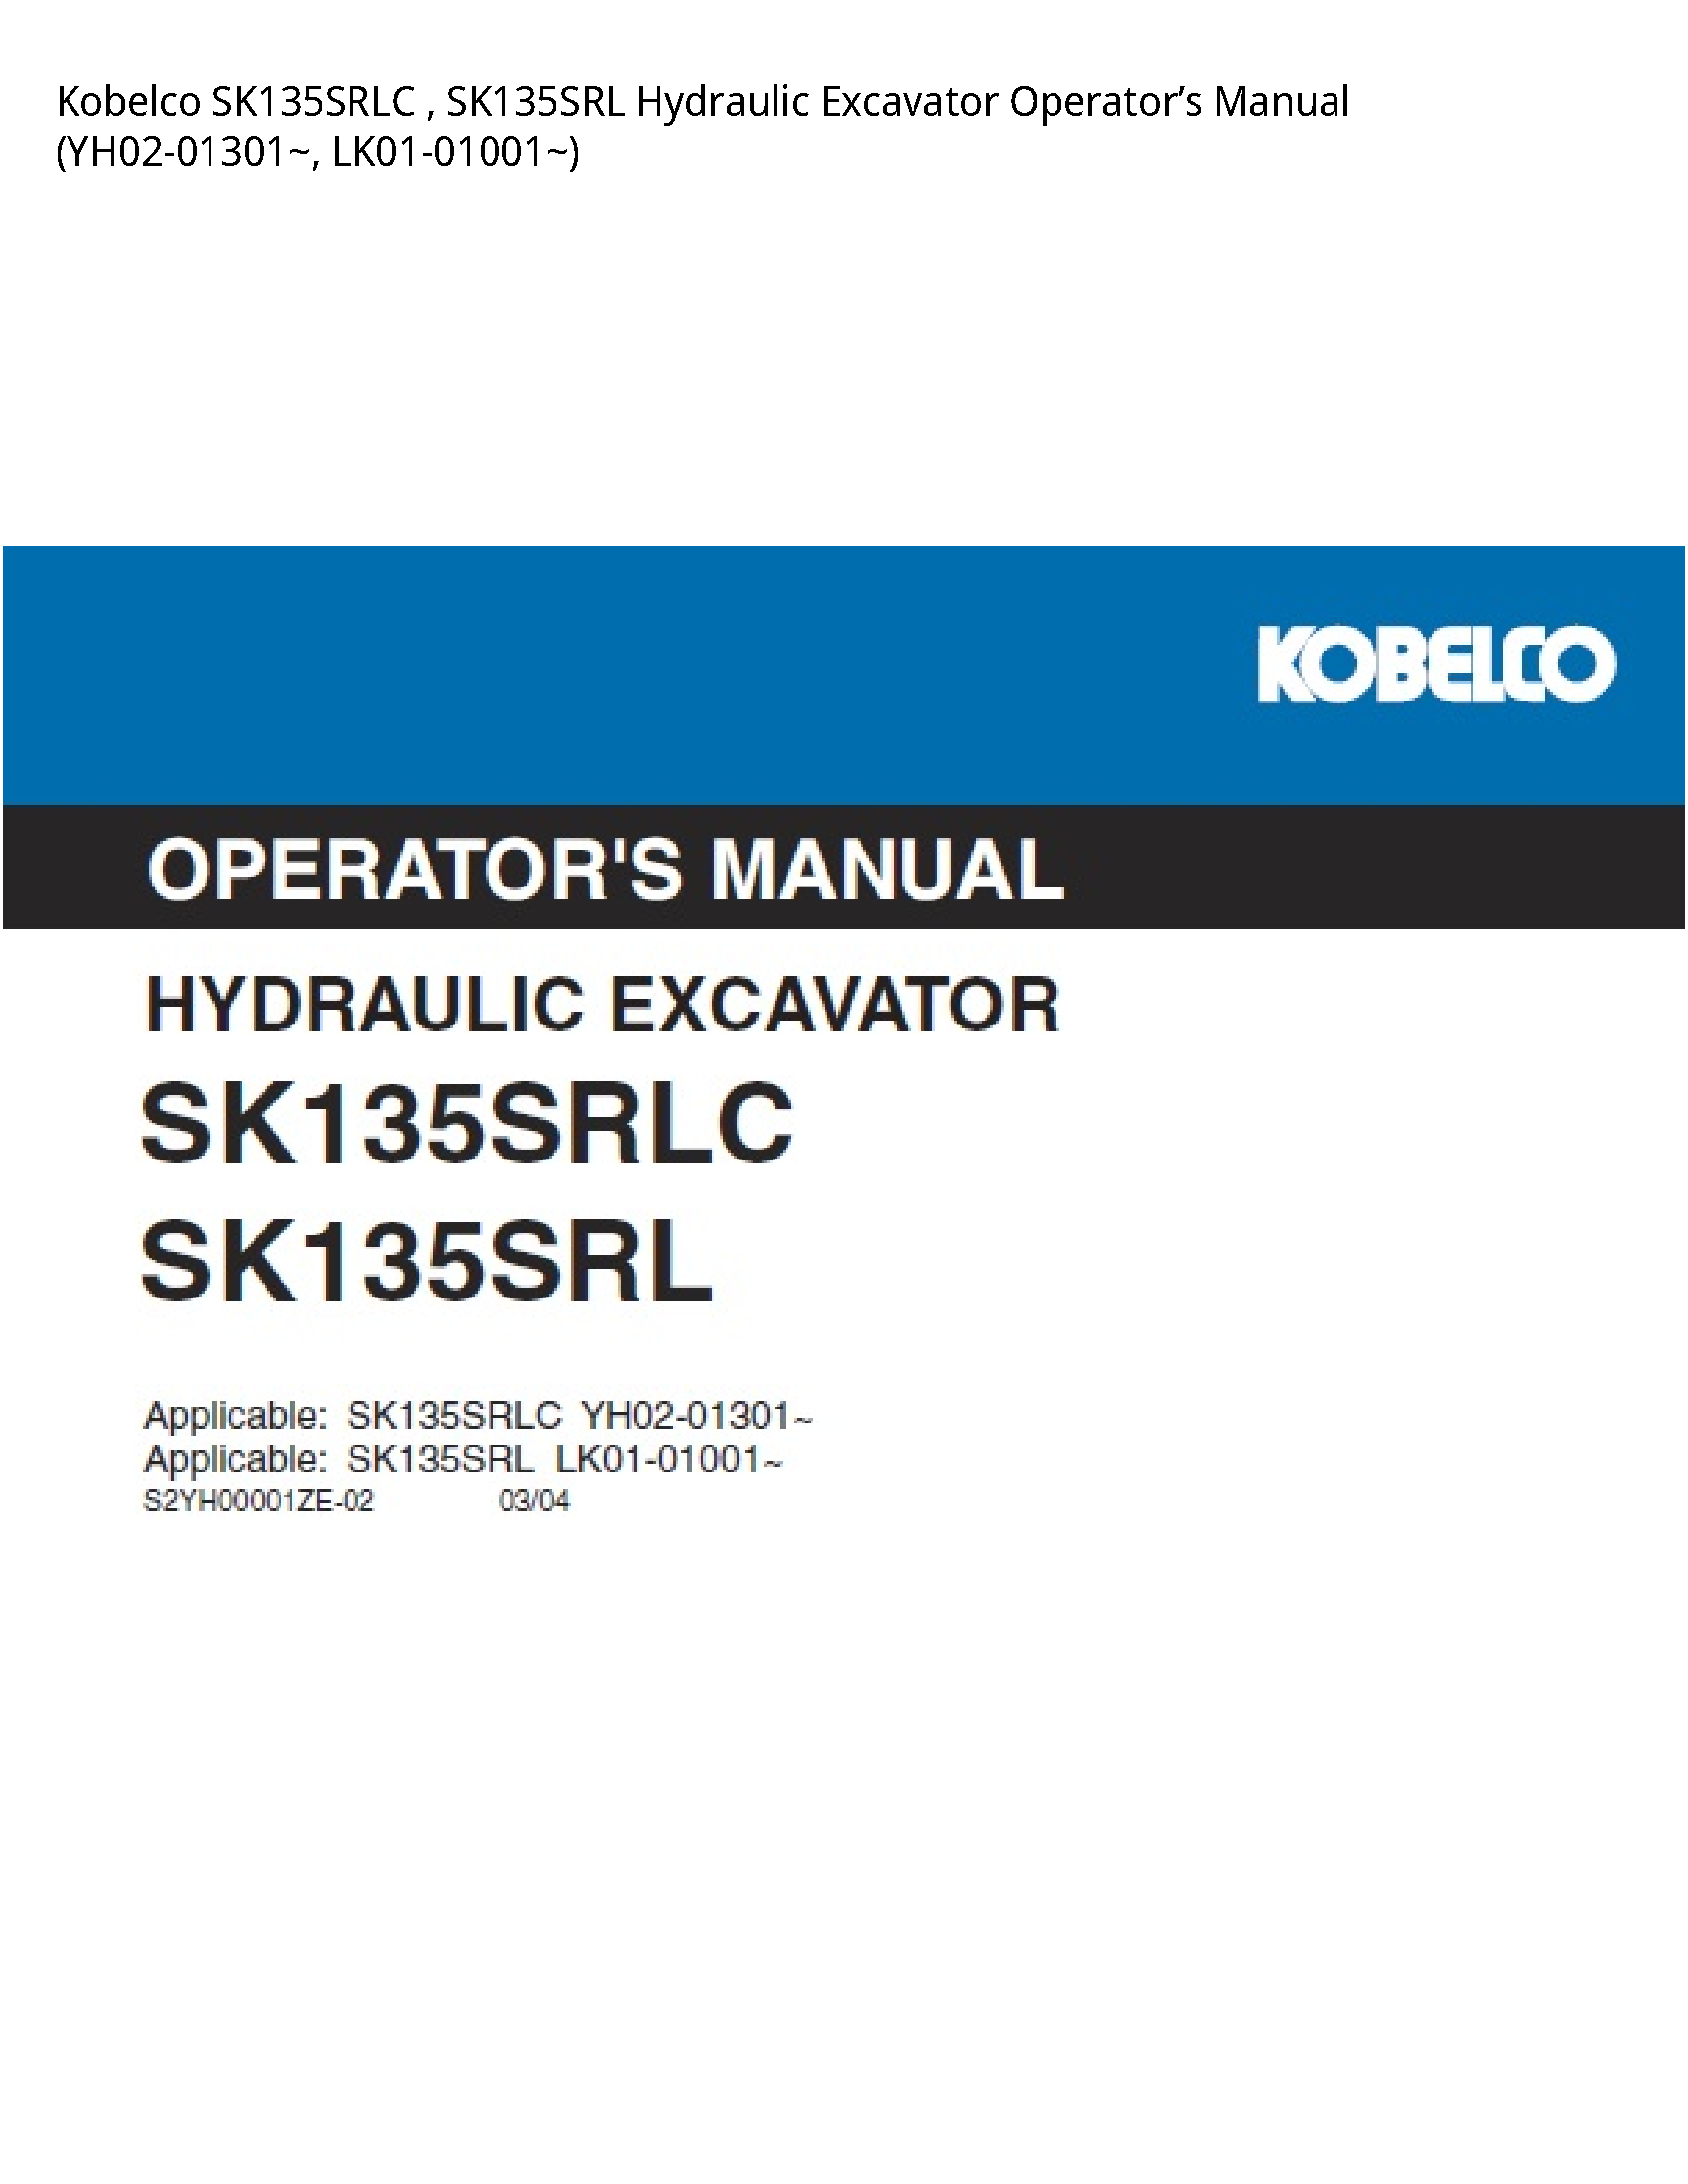 Kobelco SK135SRLC Hydraulic Excavator Operator’s manual